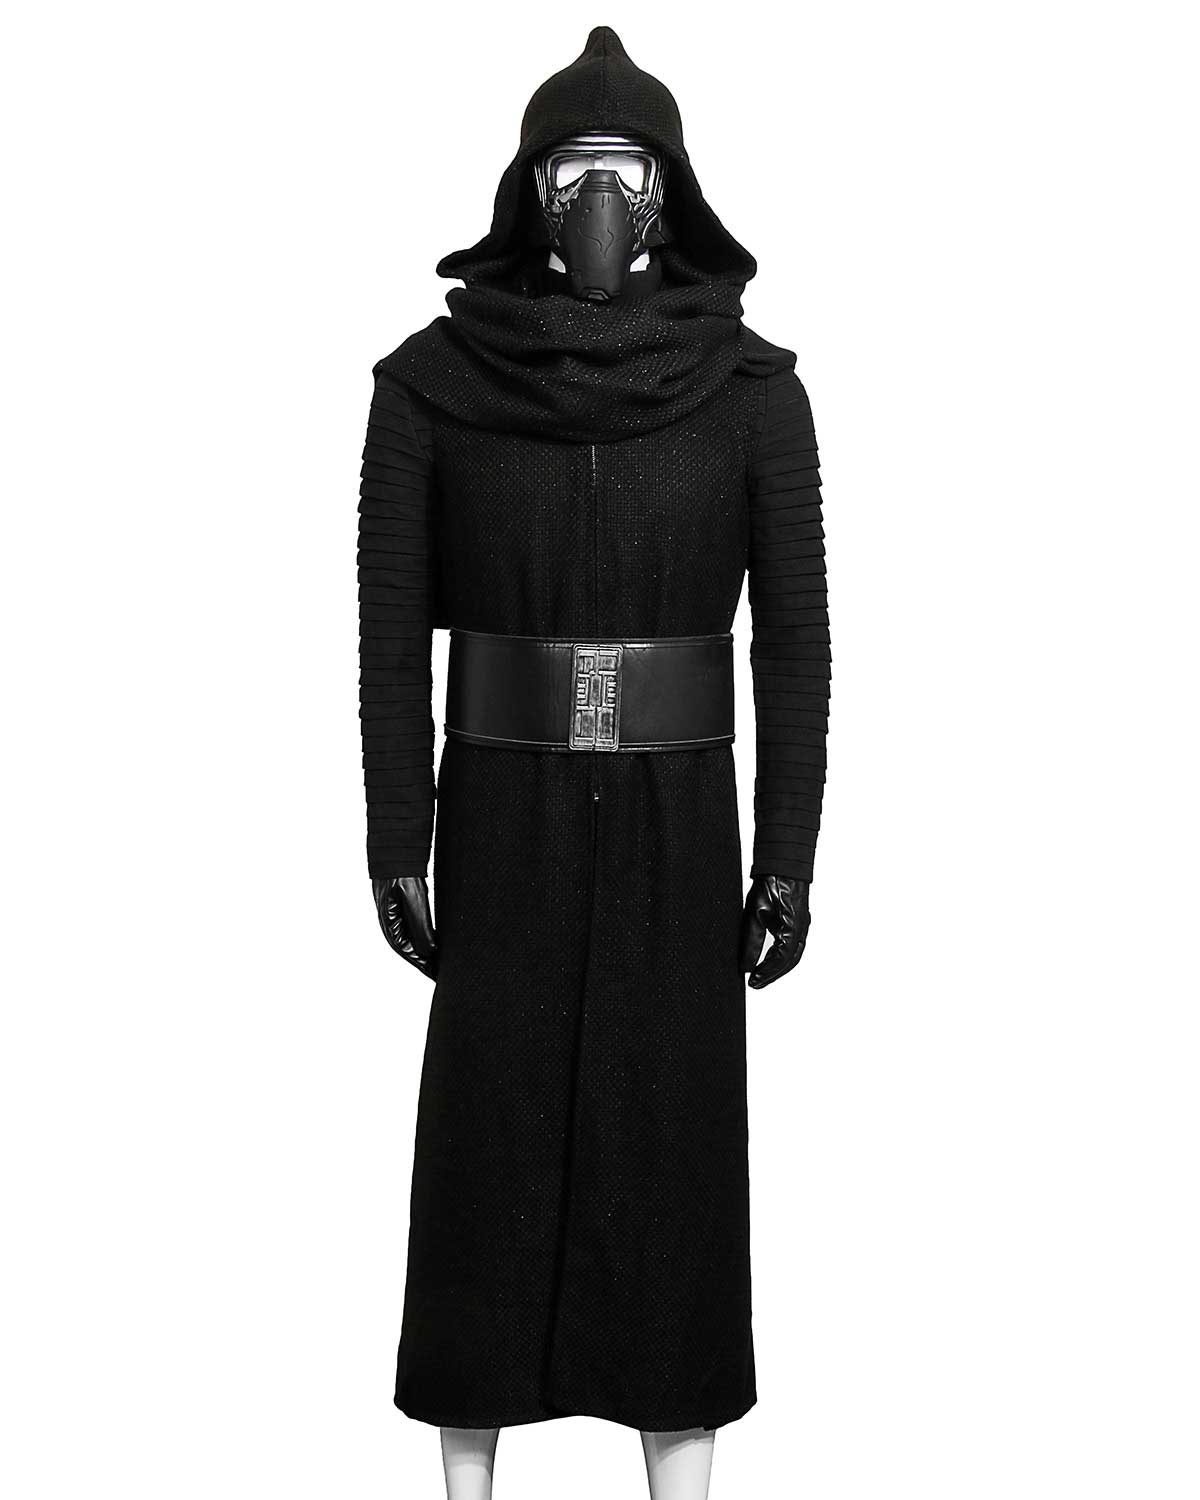 Kylo Ren Star Wars The Force Awakens Cosplay Costume